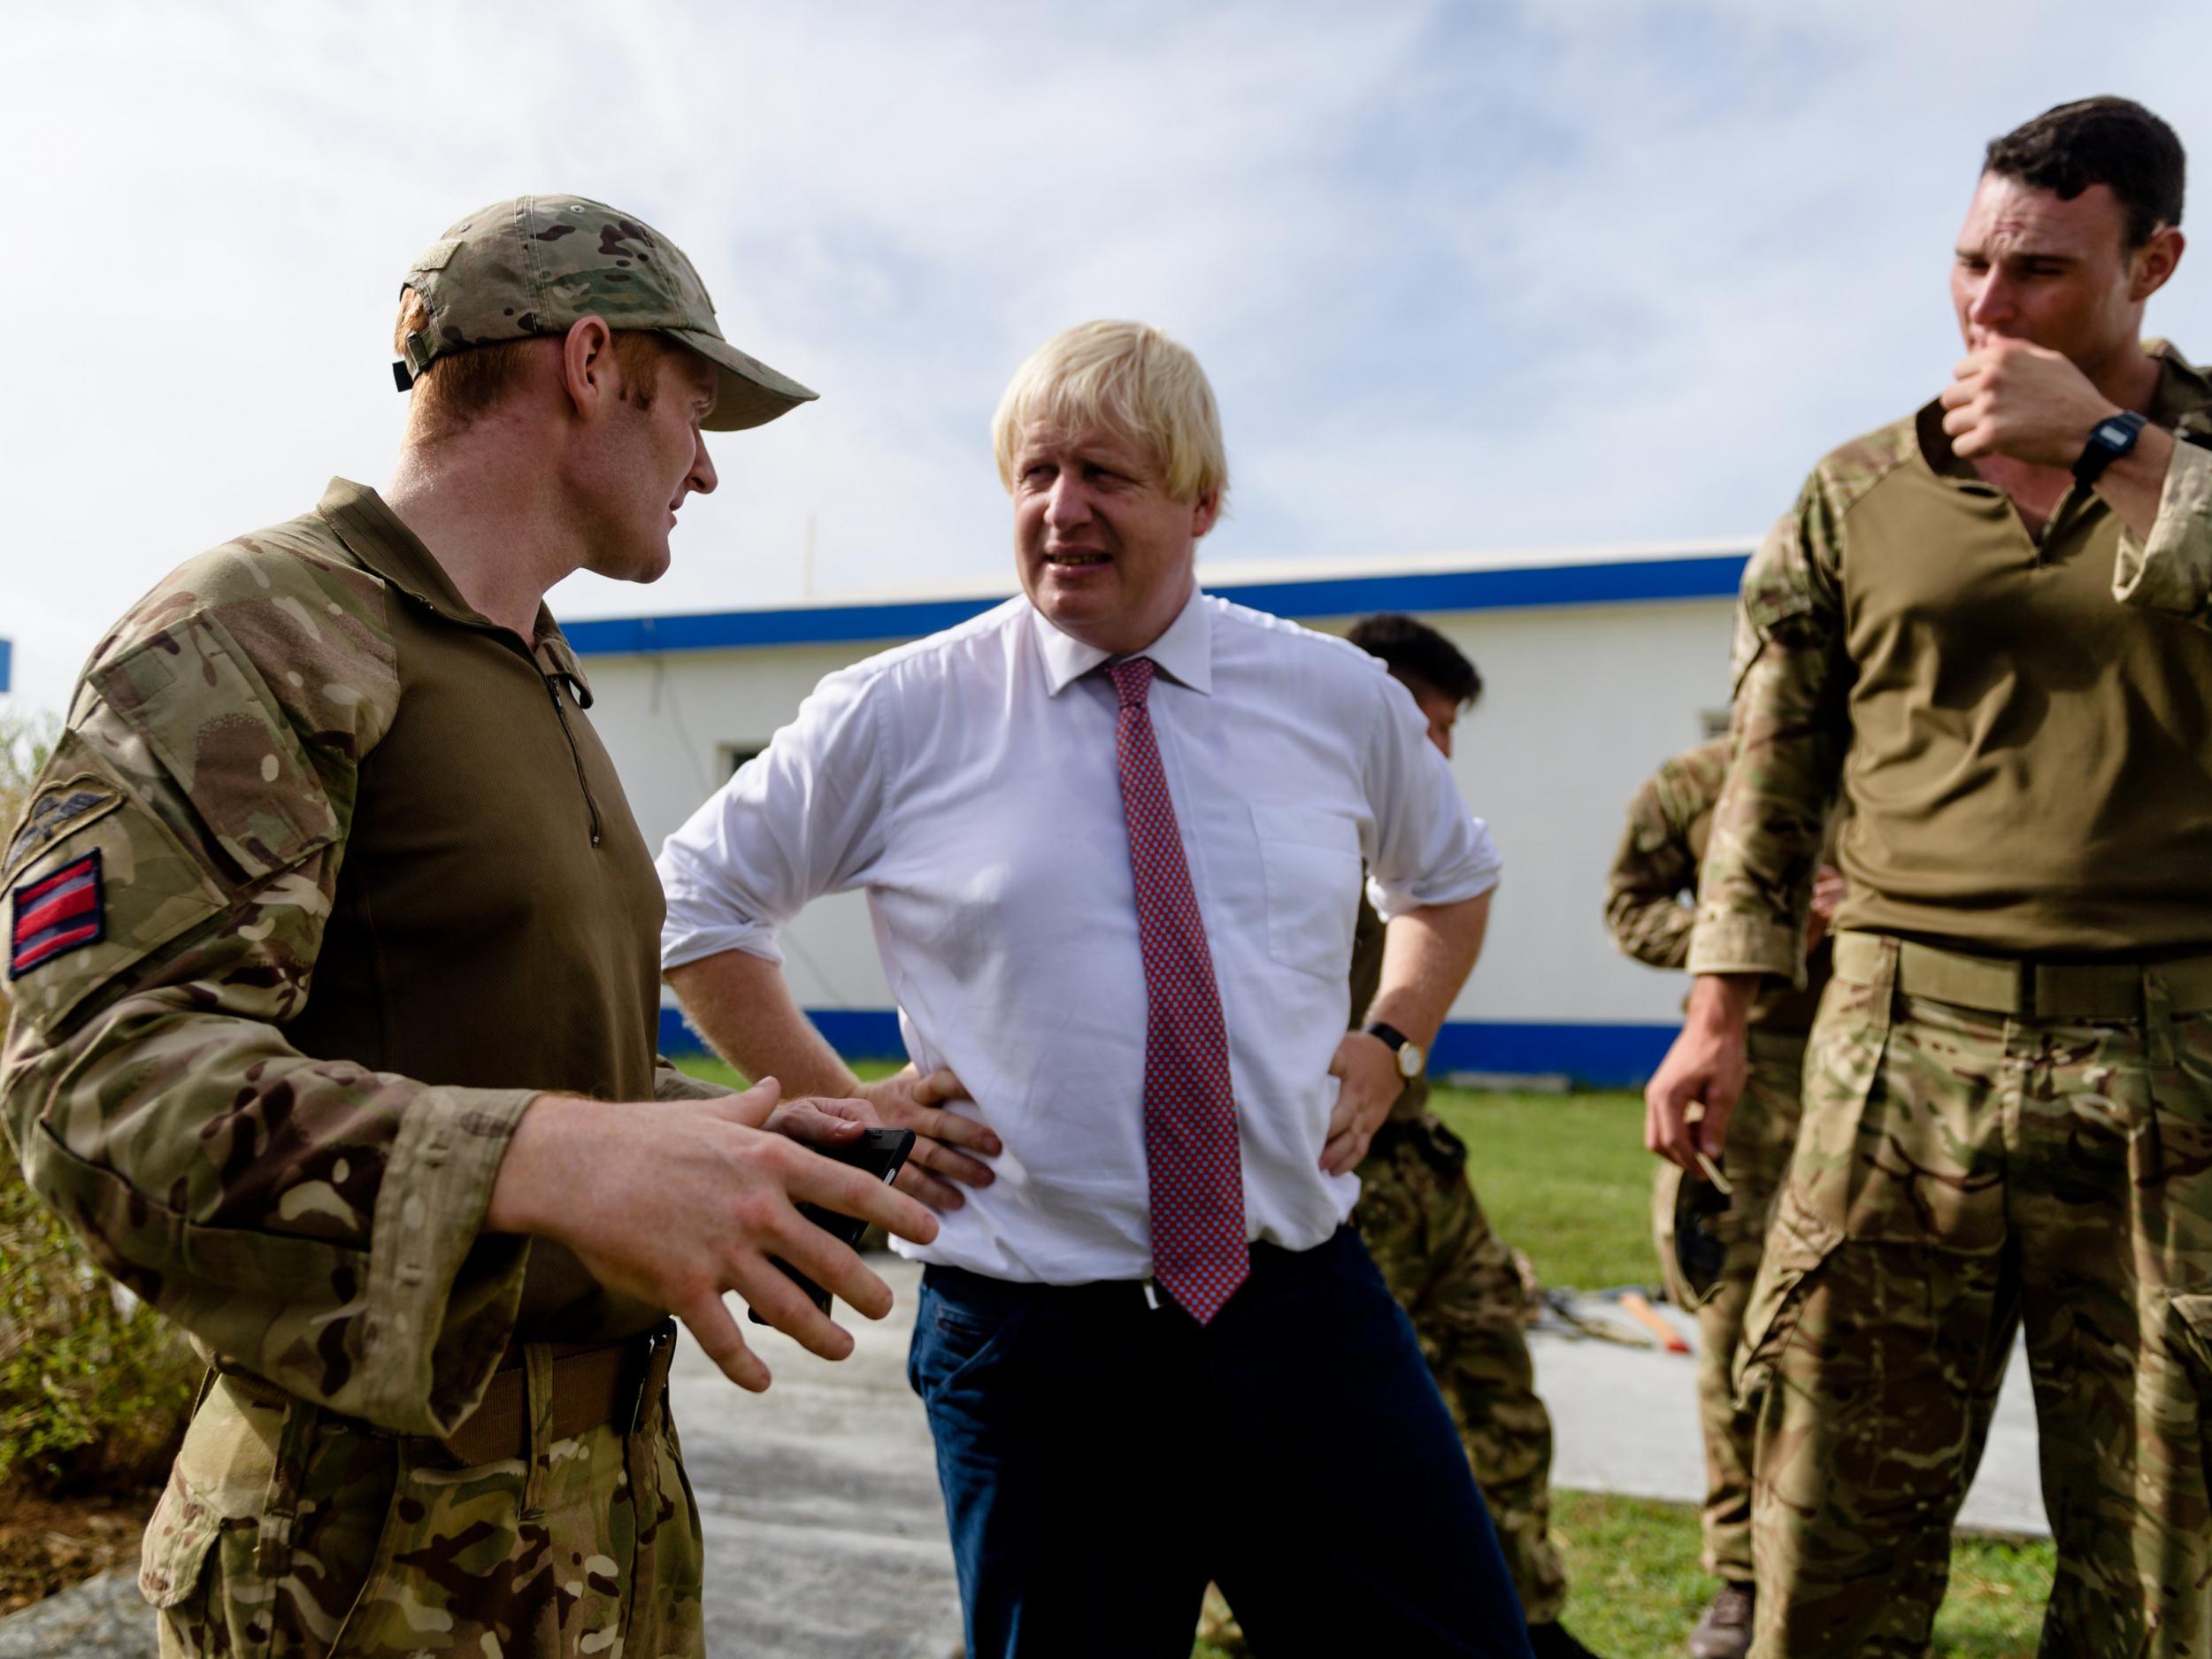 Boris Johnson seems to be upping his leadership bid, albeit in a terrible way